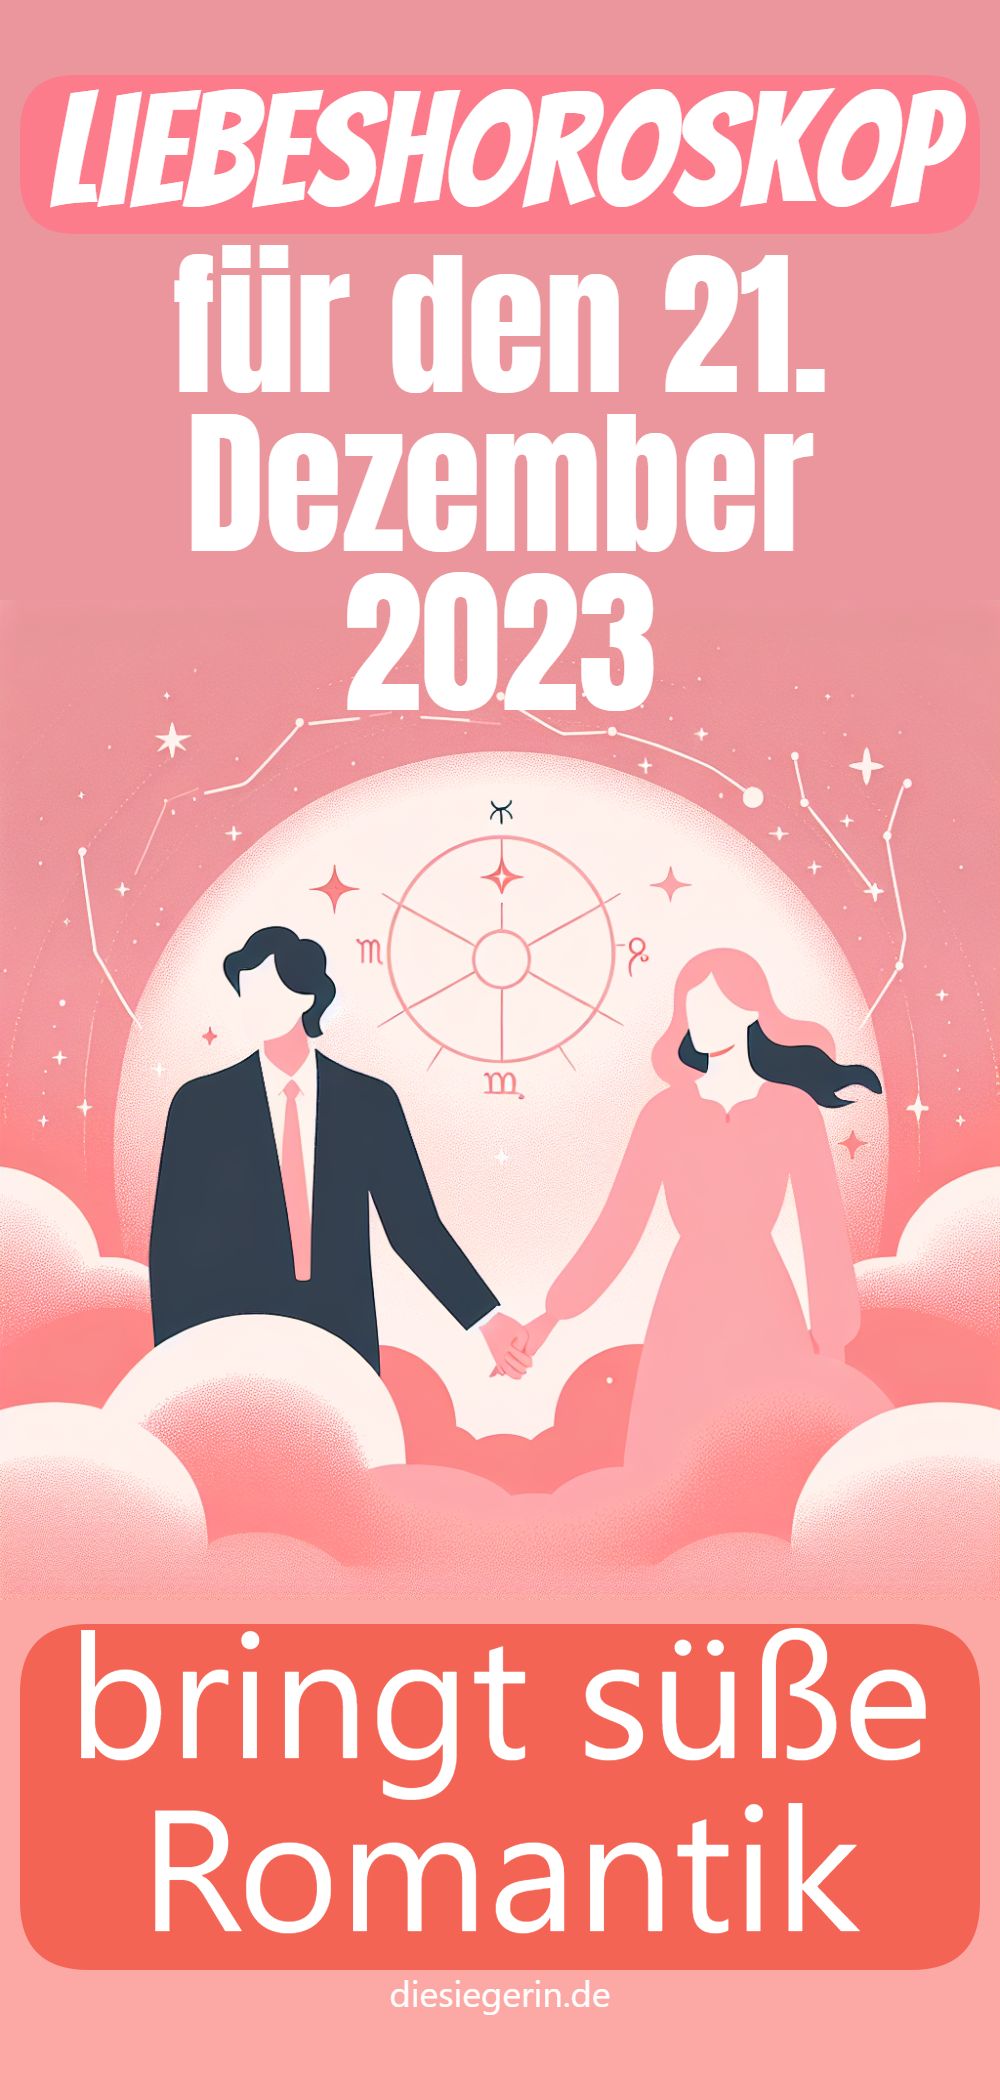 Liebeshoroskop für den 21. Dezember 2023 bringt süße Romantik